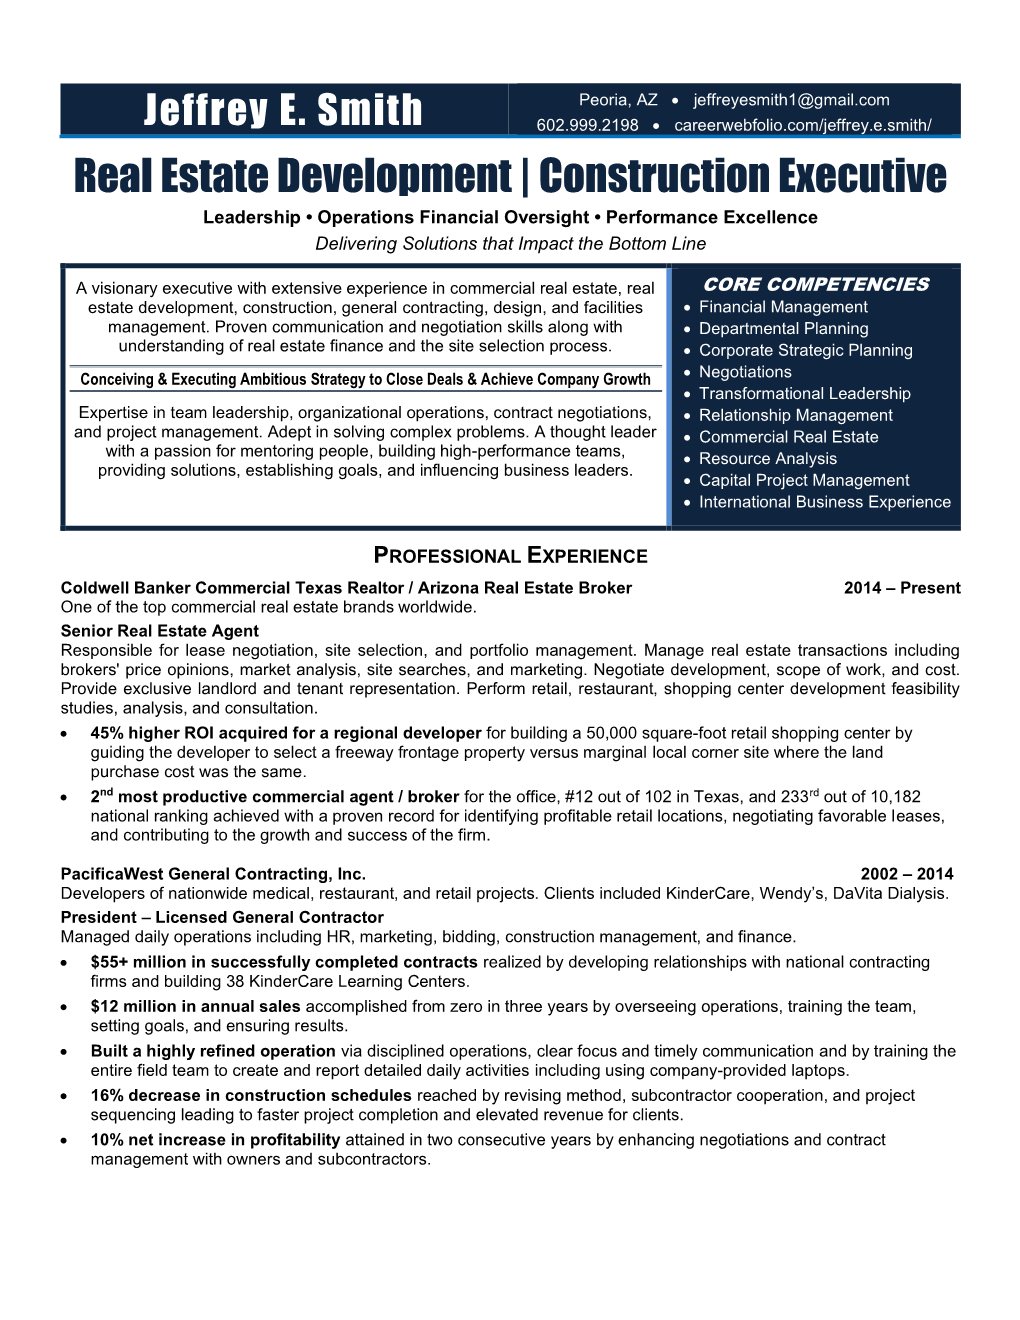 Real Estate Development | Construction Executive